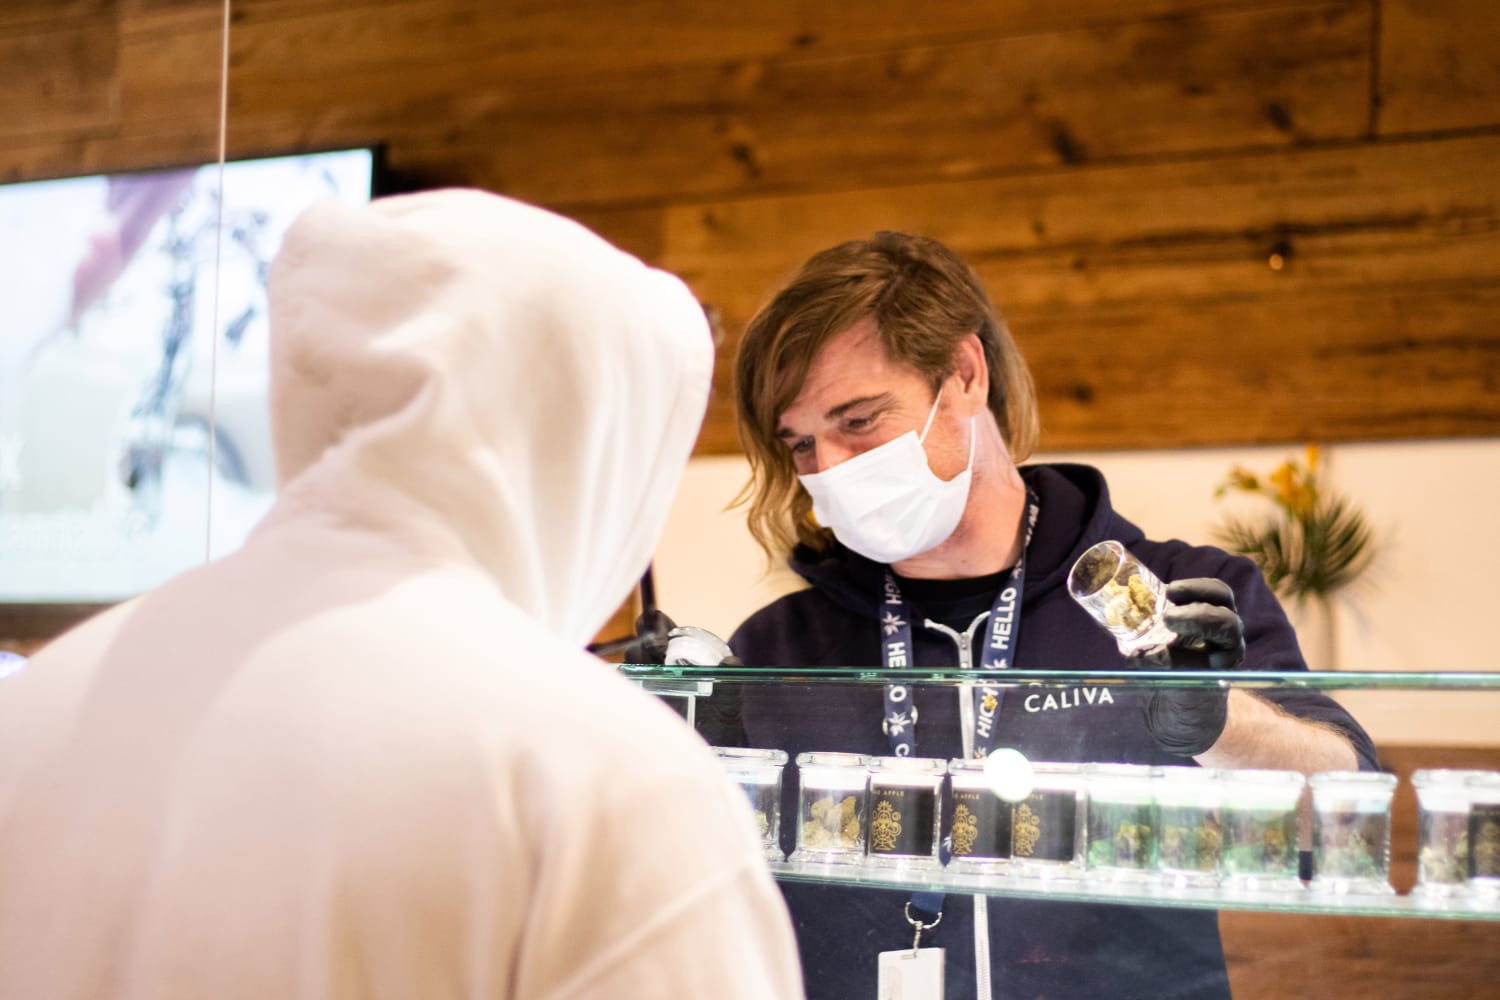 Marijuana Delivery Services are Blazing Hot During Coronavirus Quarantine